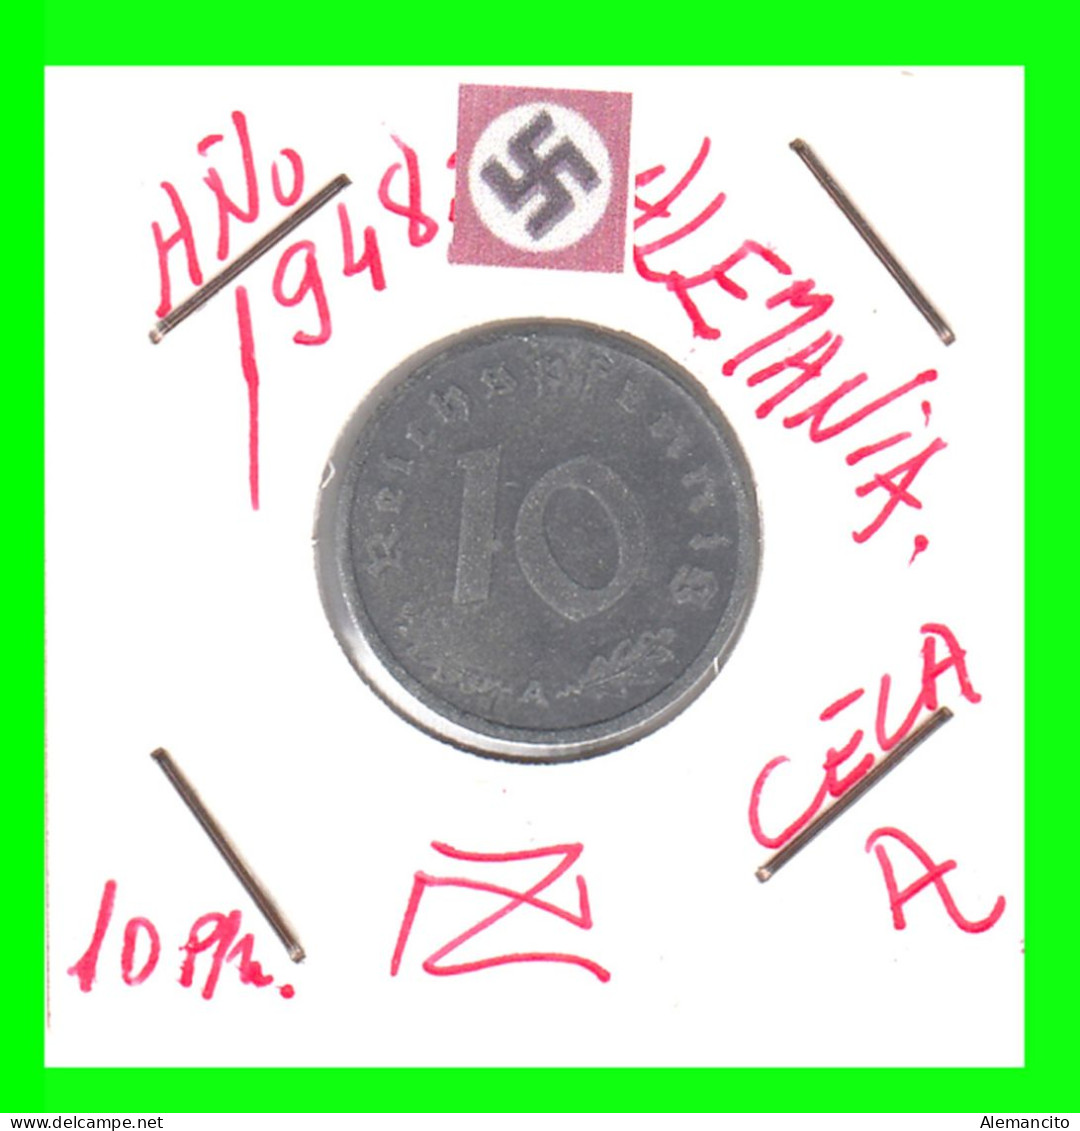 ALEMANIA - GERMANY MONEDA DE 10 REICHSPFNNIG TERCER REICHS ( AÑO 1948 CECA - A )  COMPOCISIÓN ZINC - 10 Reichspfennig